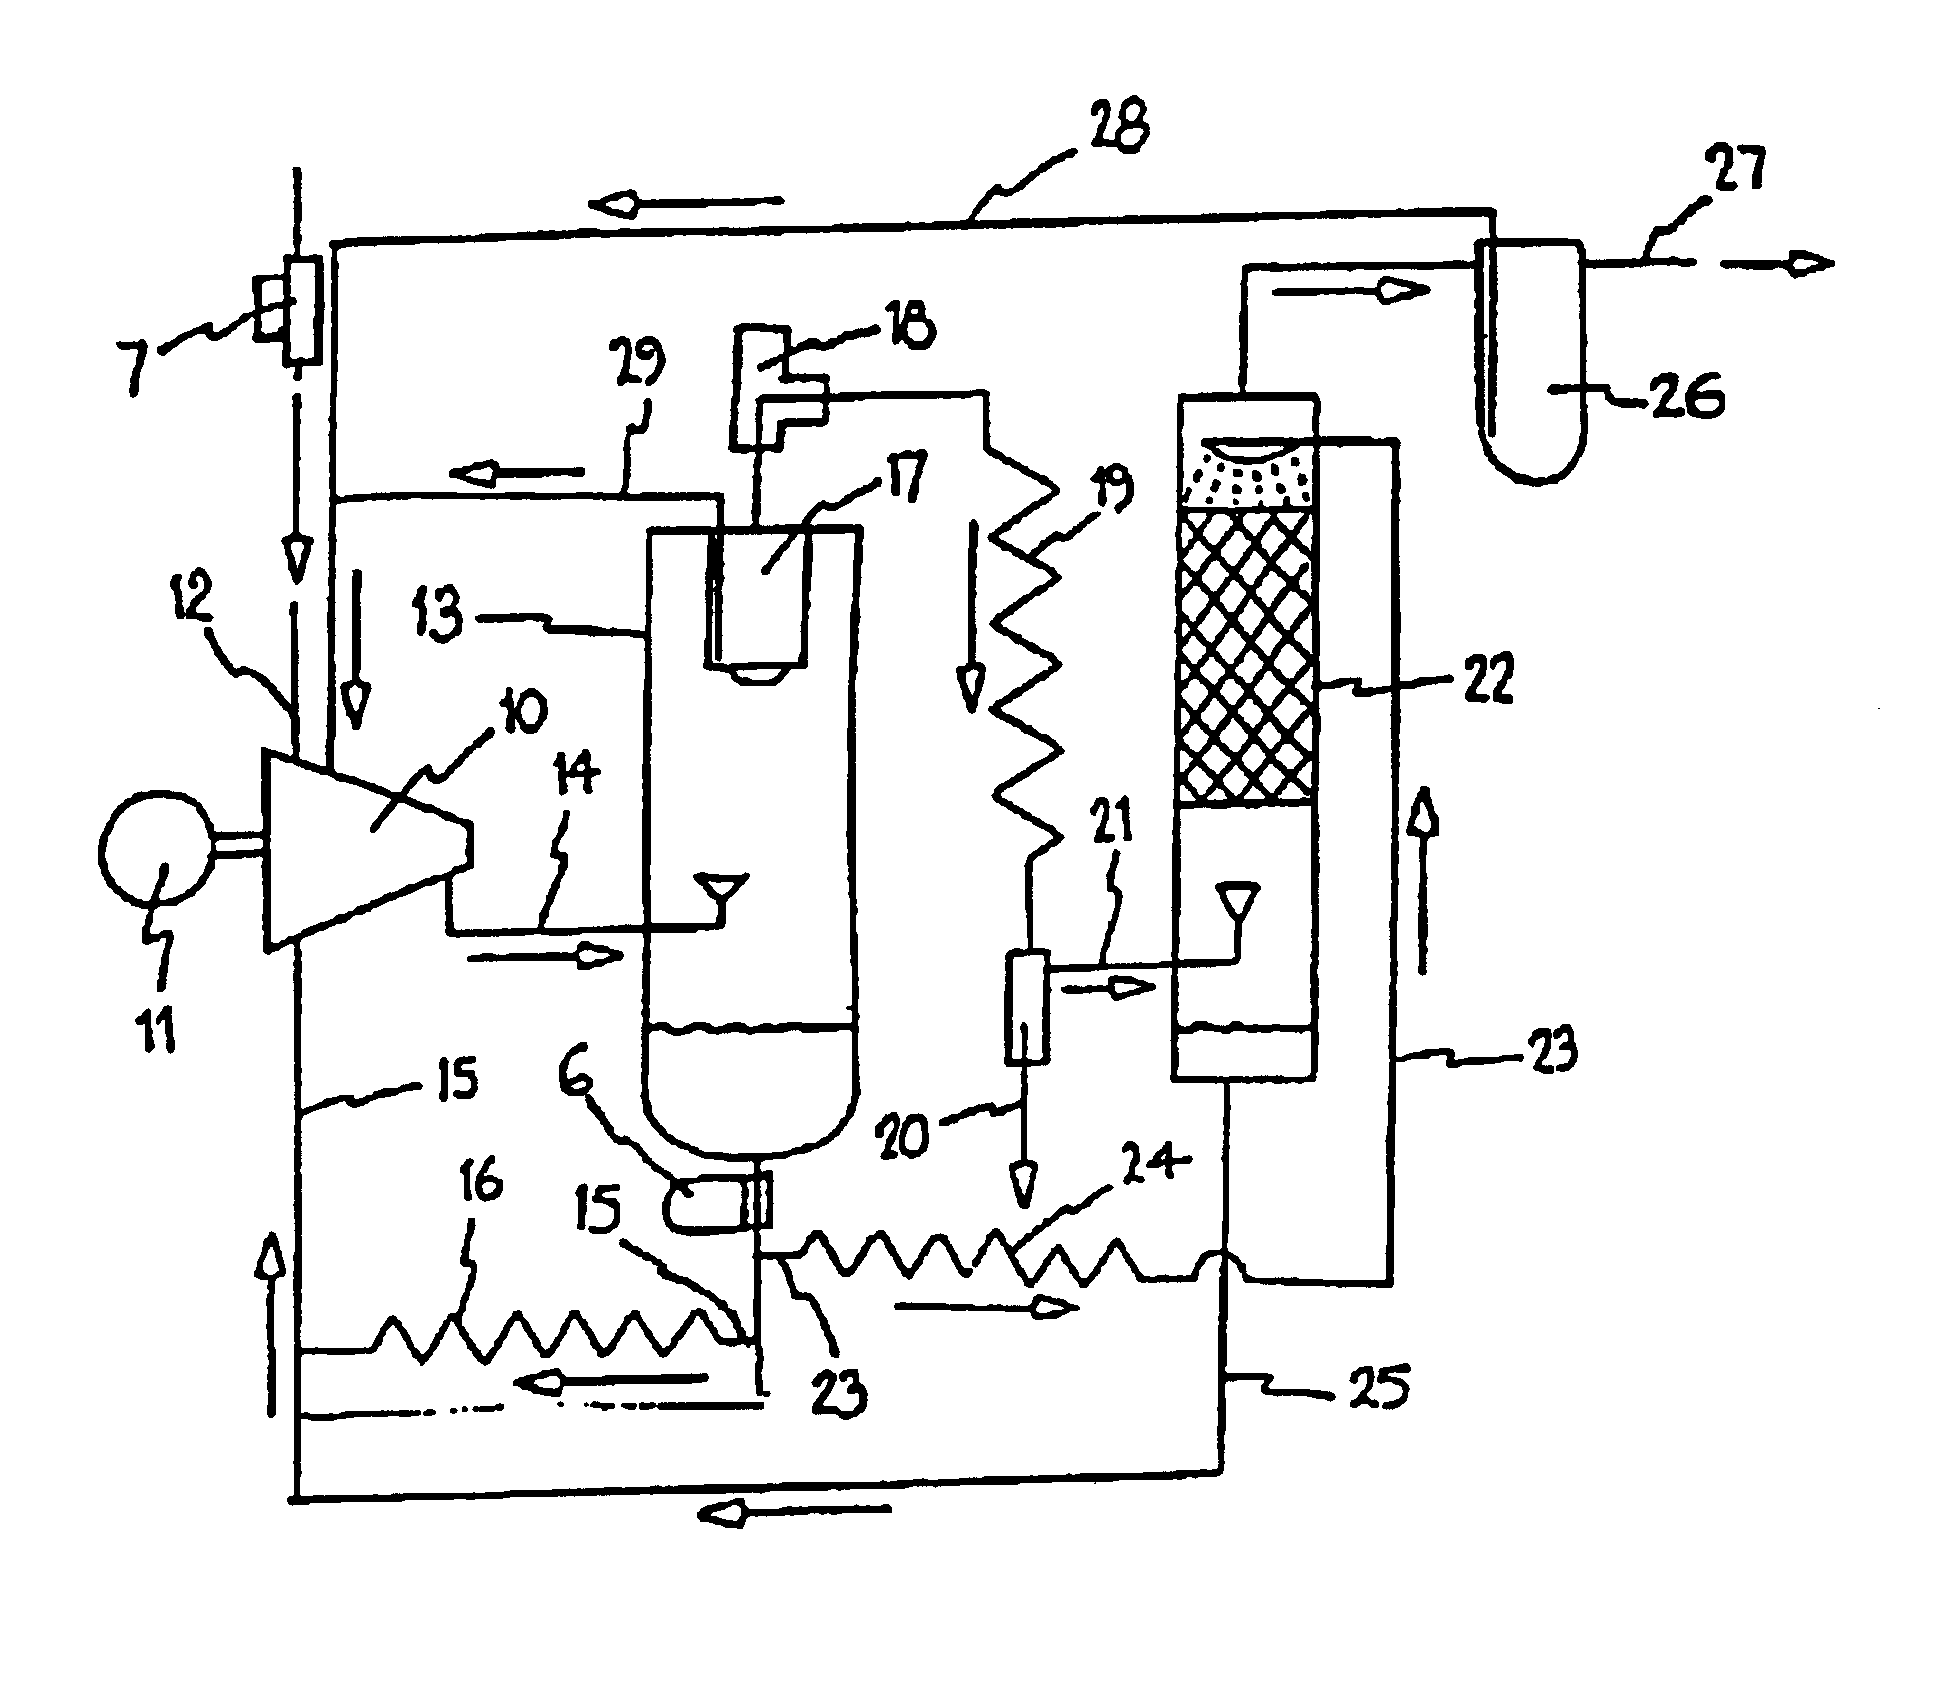 Integrated compressor drier apparatus